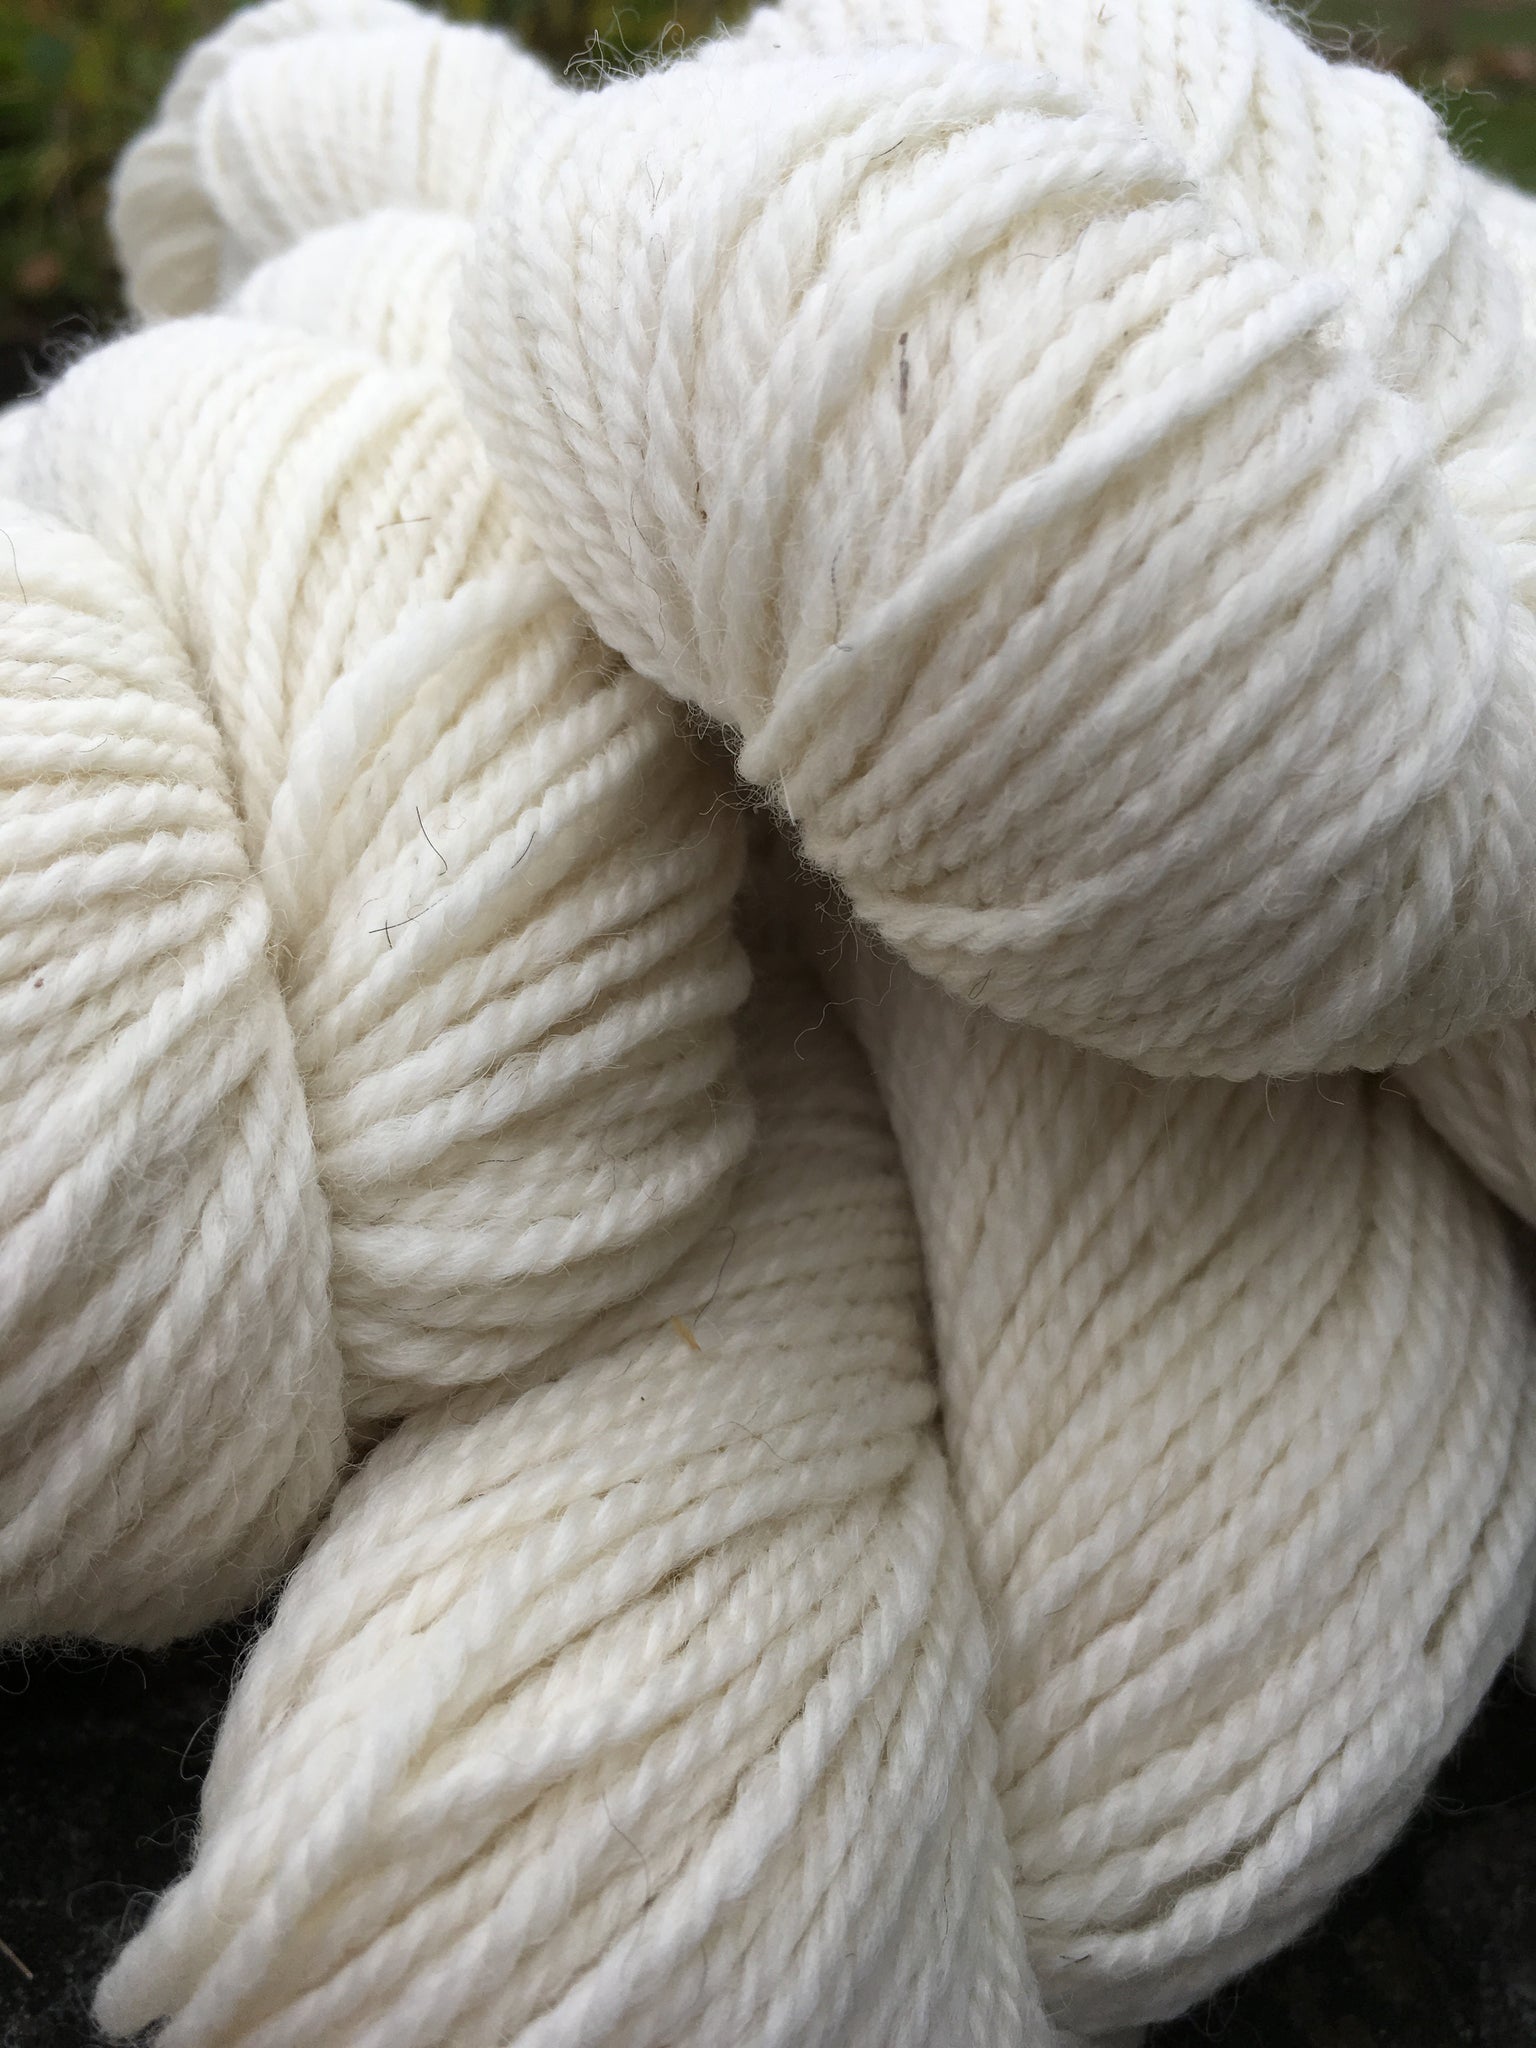 Yarn: Pearl, White DK